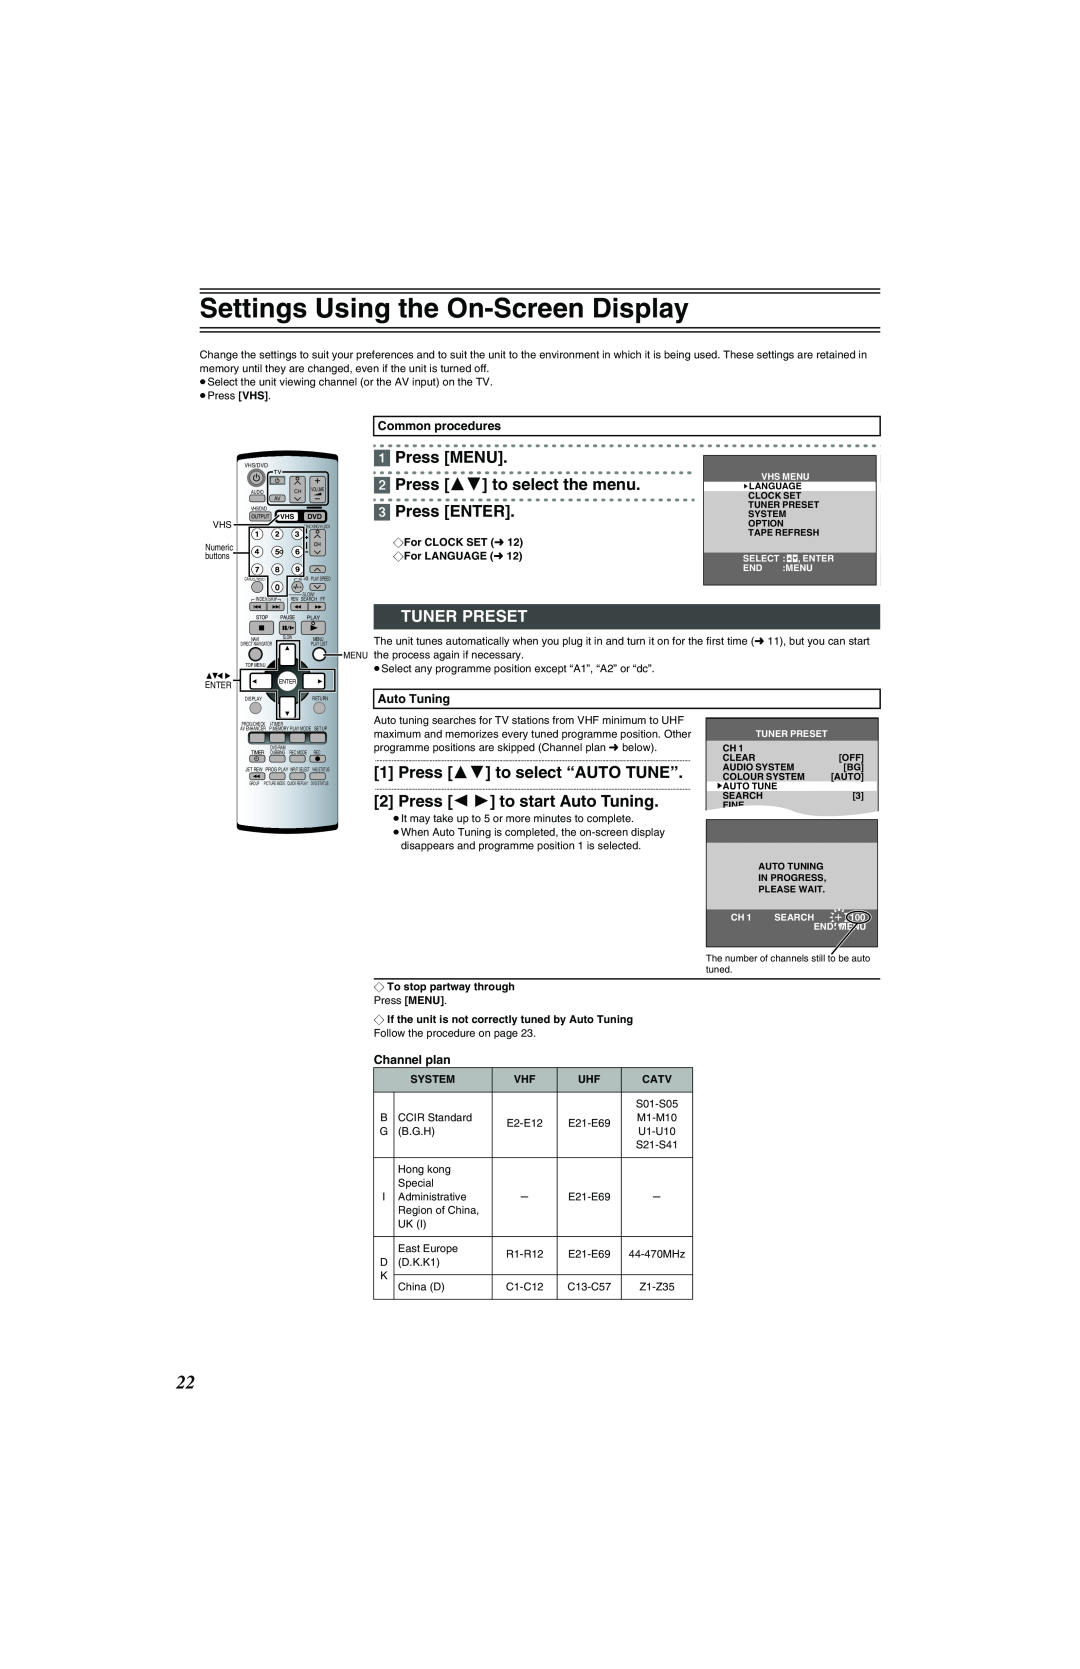 Panasonic NV-VP32 Series Settings Using the On-Screen Display, Tuner Preset, Press 34 to select “AUTO TUNE”, System, Catv 